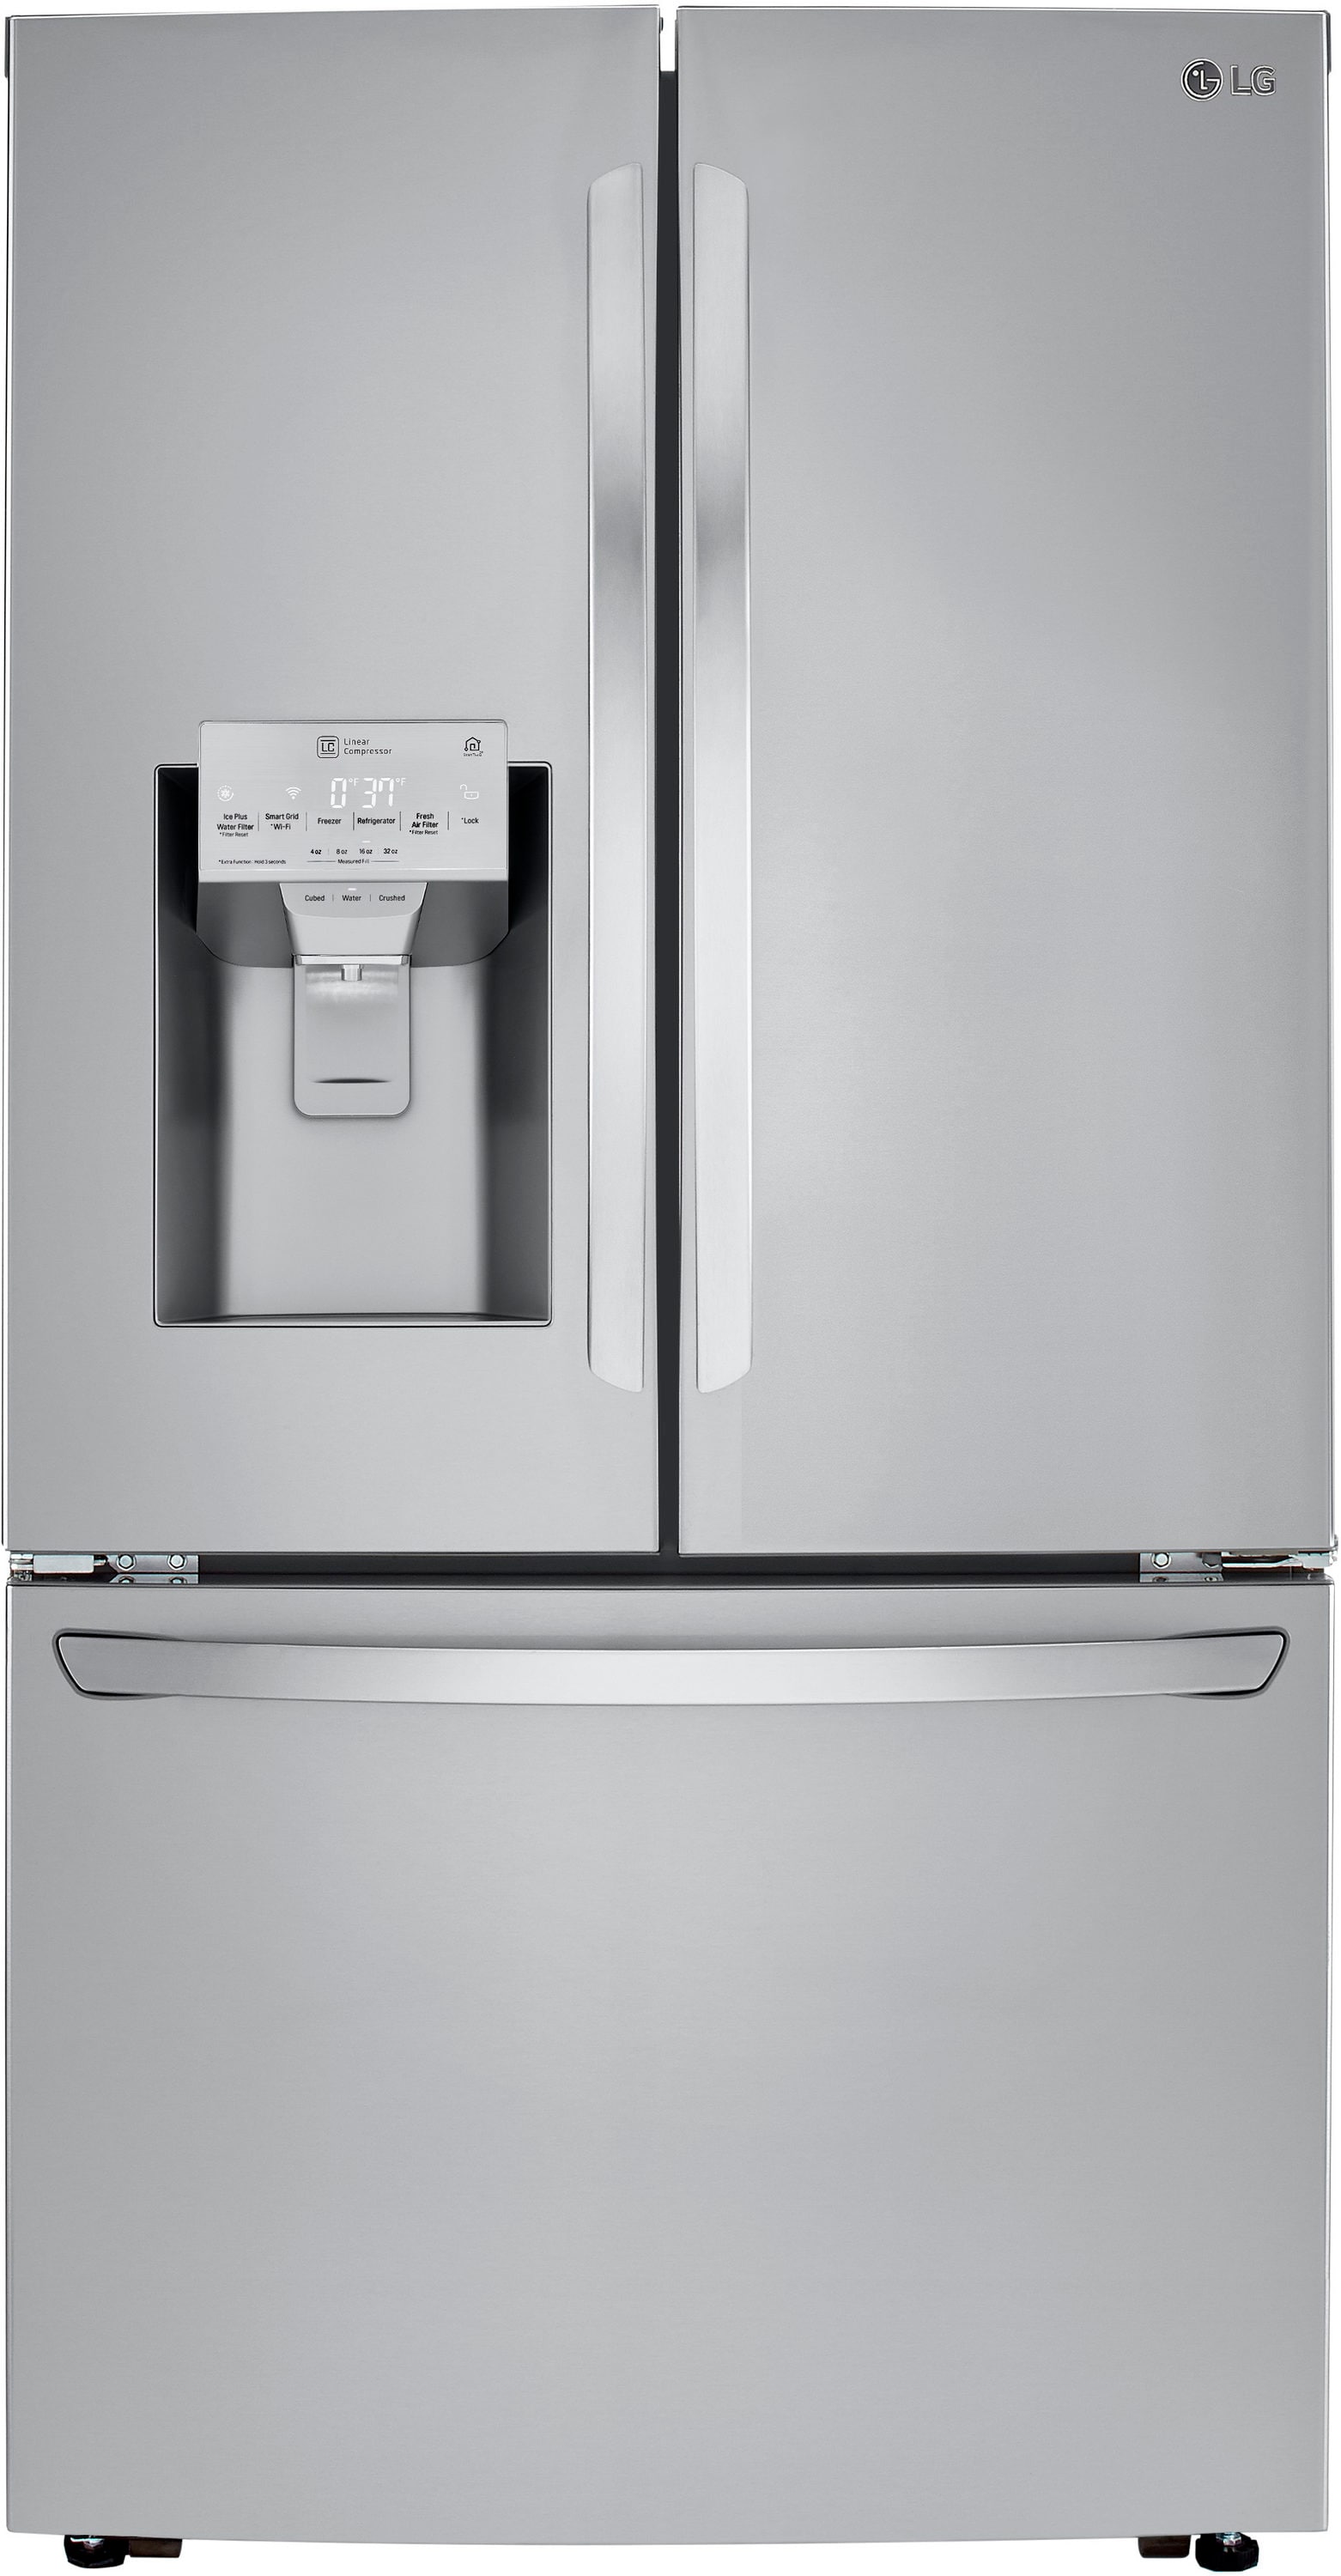 Discover the LG Craft Ice Refrigerator!